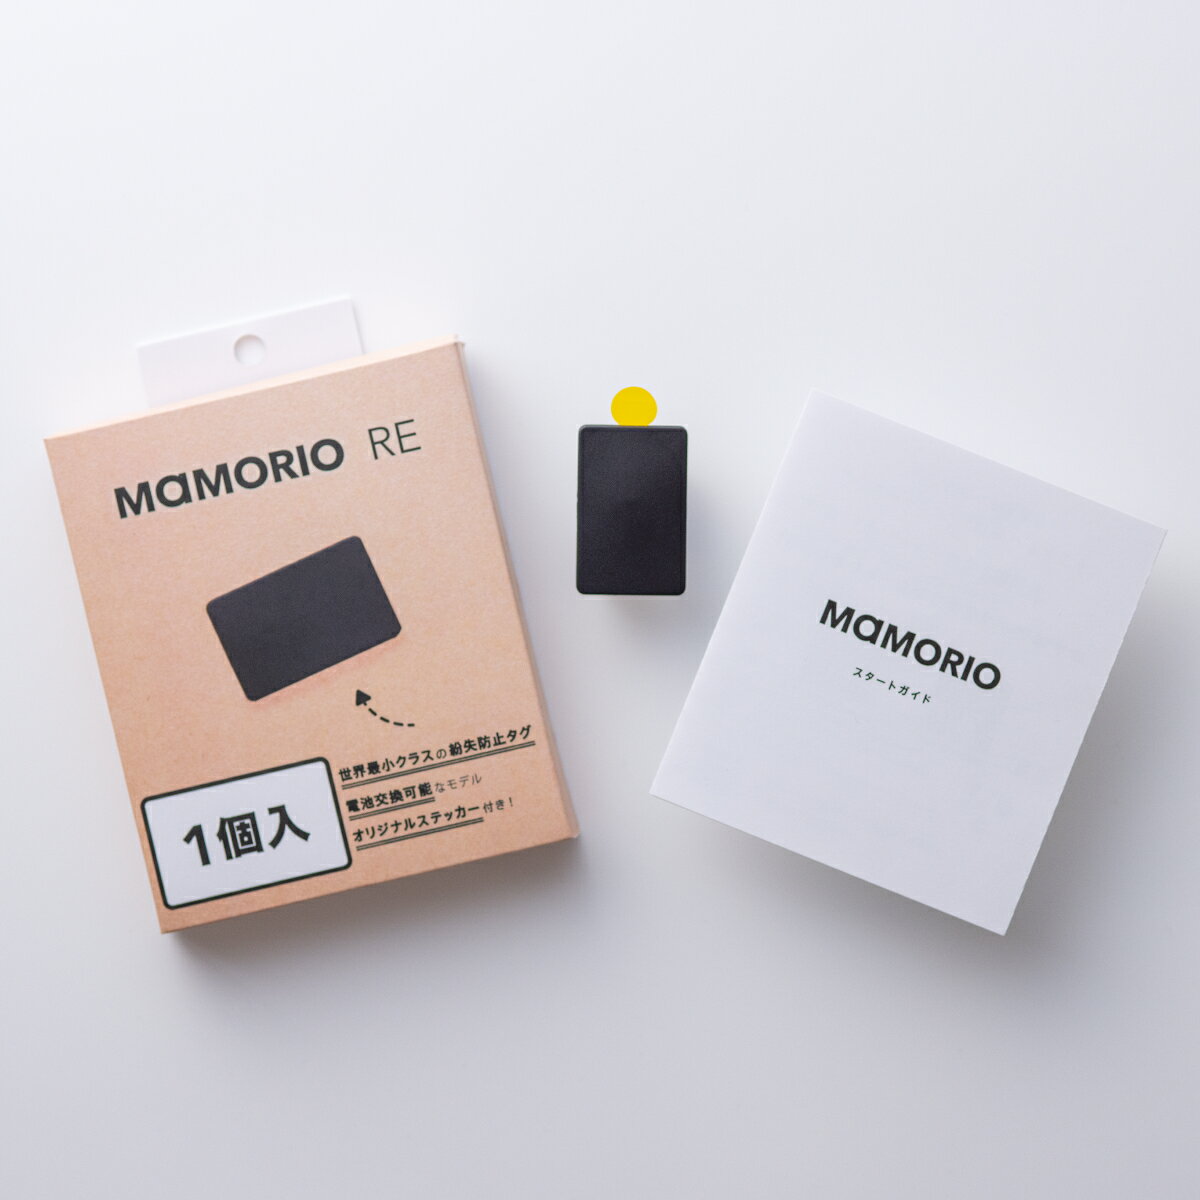 MAMORIO RE スマートタグ マモリオ アールイー BLACK 1個入 電池交換可能 世界最軽 最小 最薄クラスの紛失防止タグ 落し物防止 忘れ物防止 タグ